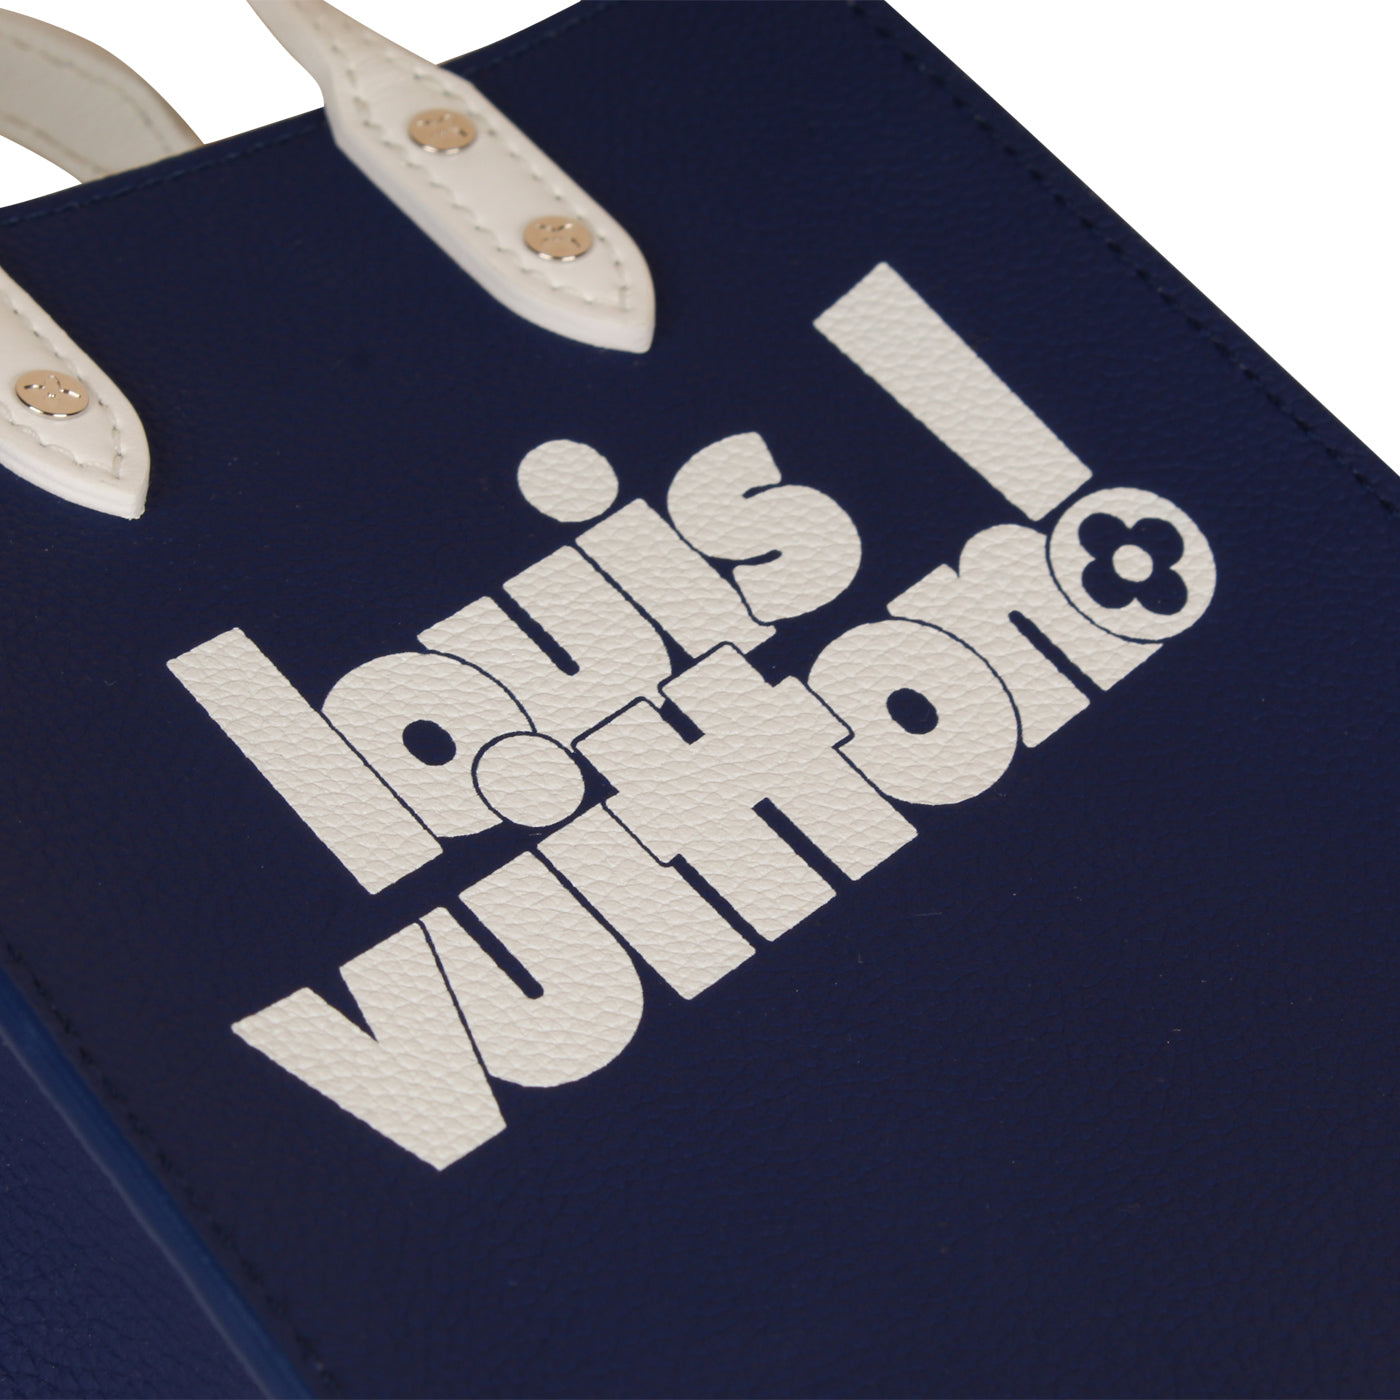 Shop Louis Vuitton PETIT SAC PLAT Petit sac plat (M81295) by viaconiglio